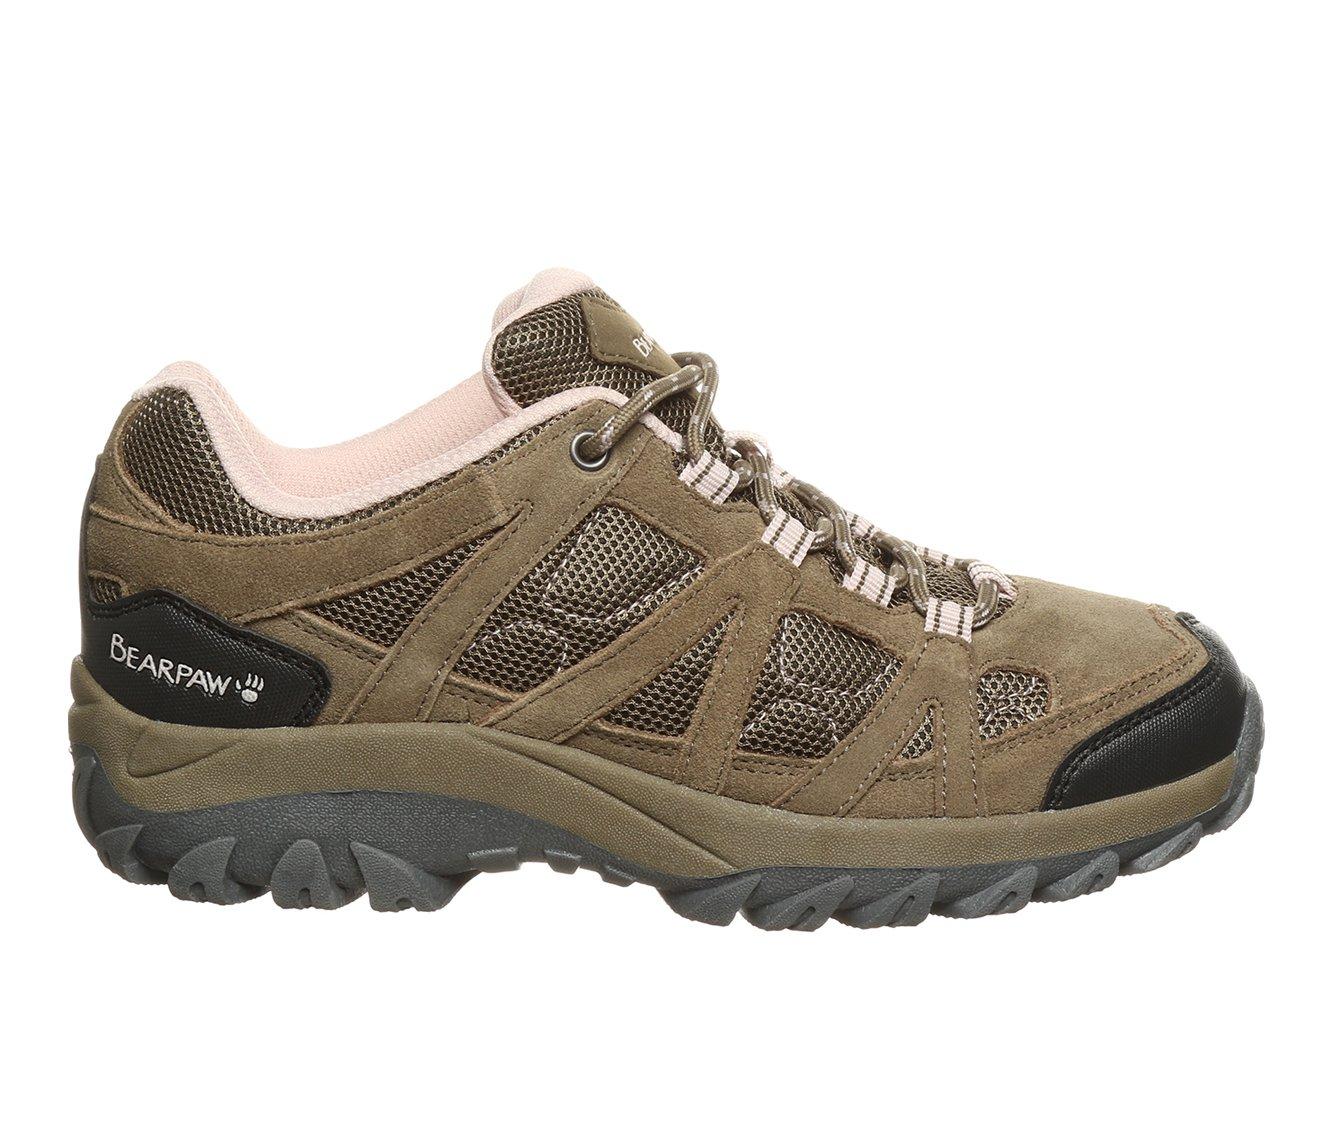 Women's Bearpaw Olympus Hiking Shoes